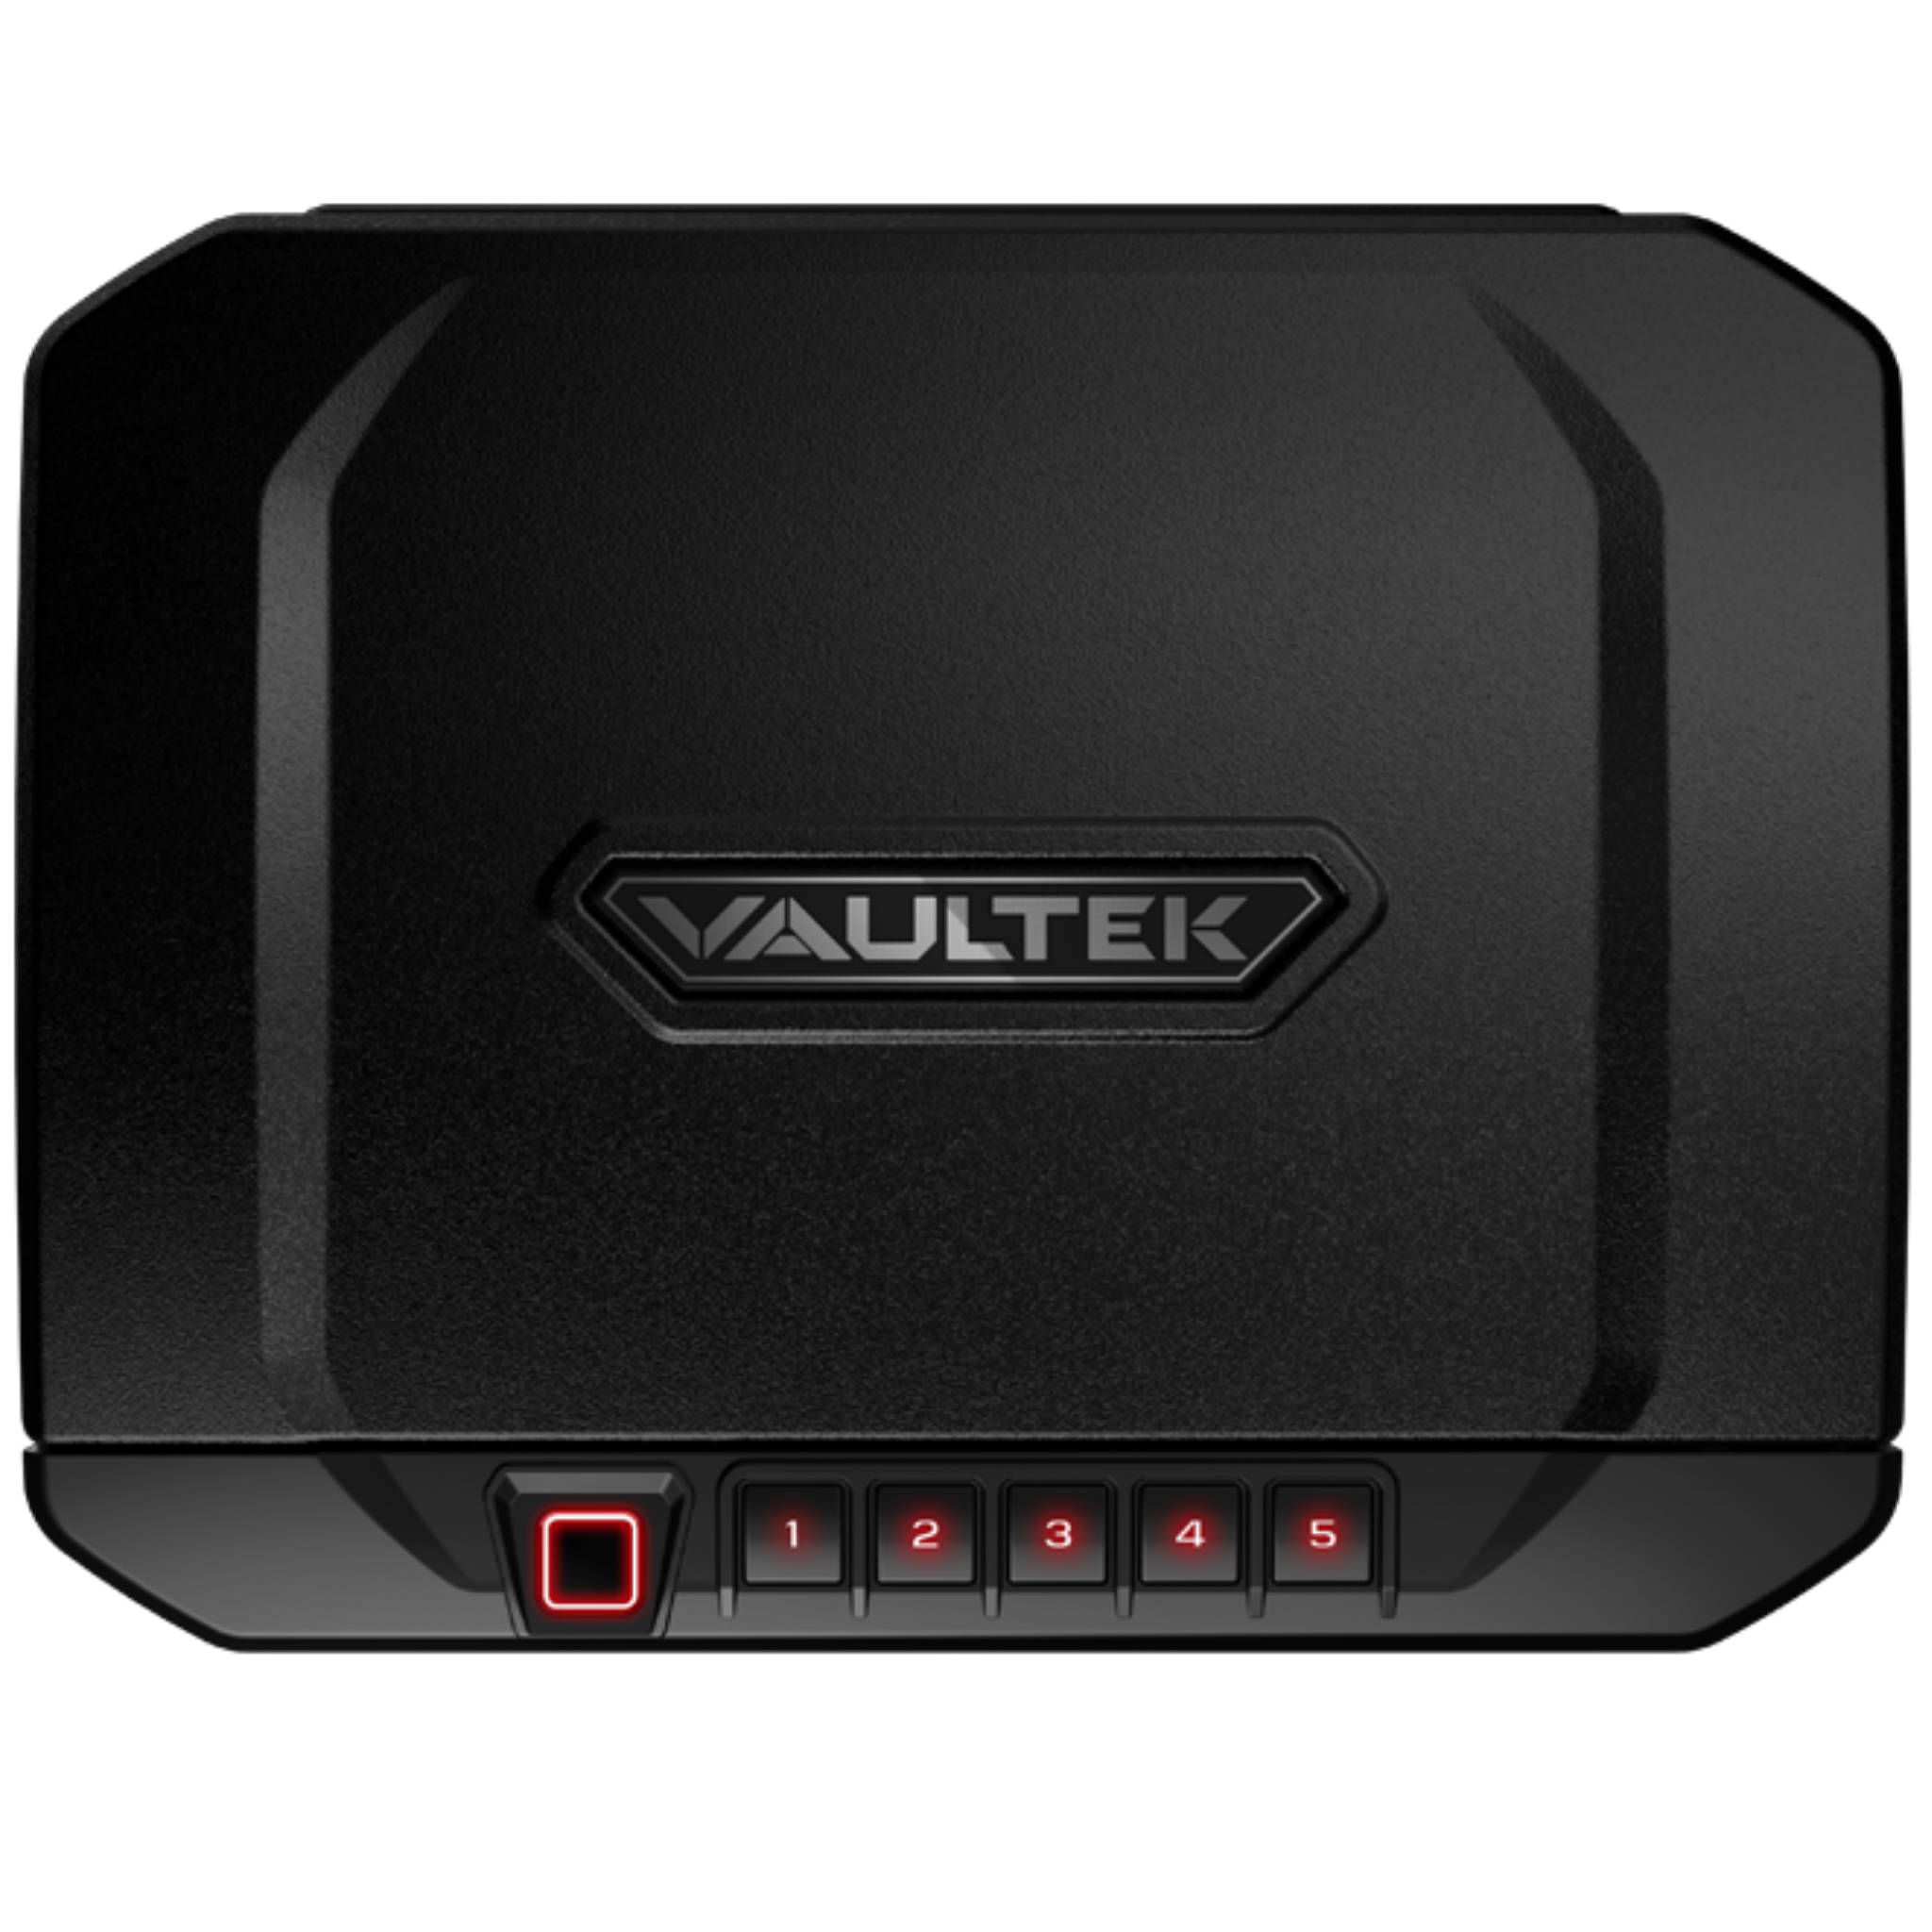 Vaultek VT10i - Bluetooth - Biometric